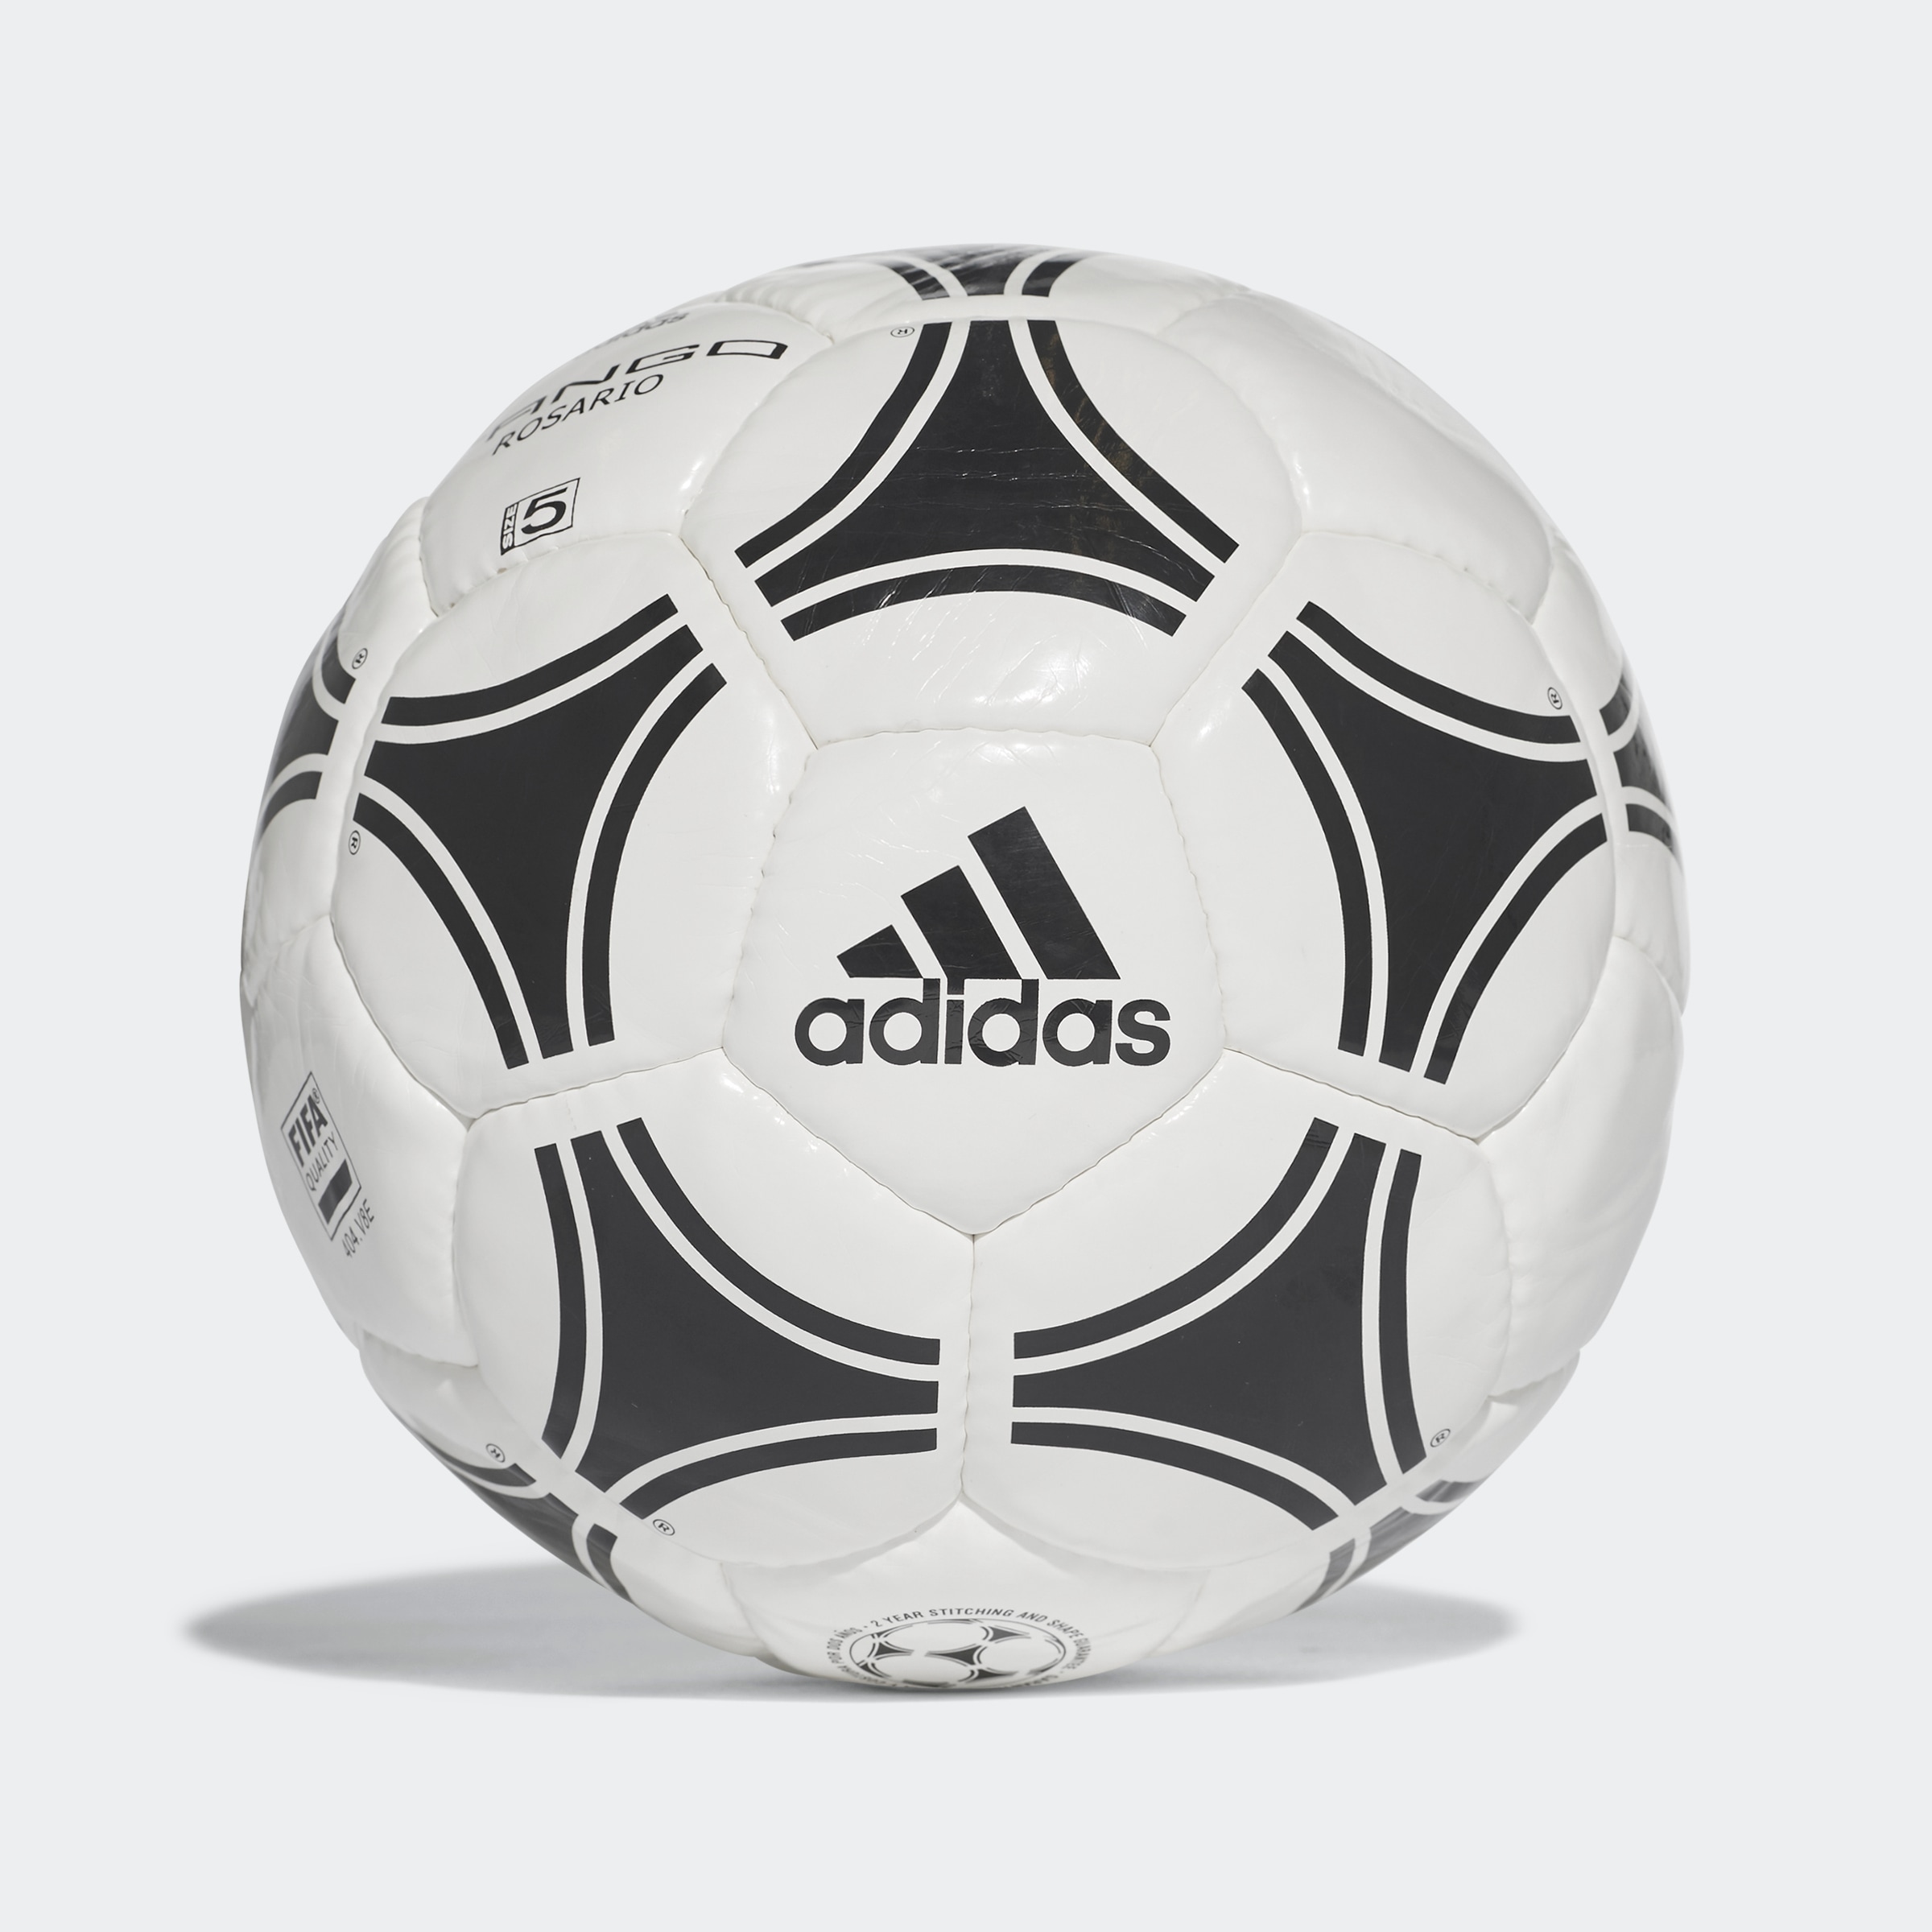 adidas Performance Fußball »TANGO ROSARIO BALL« (1)